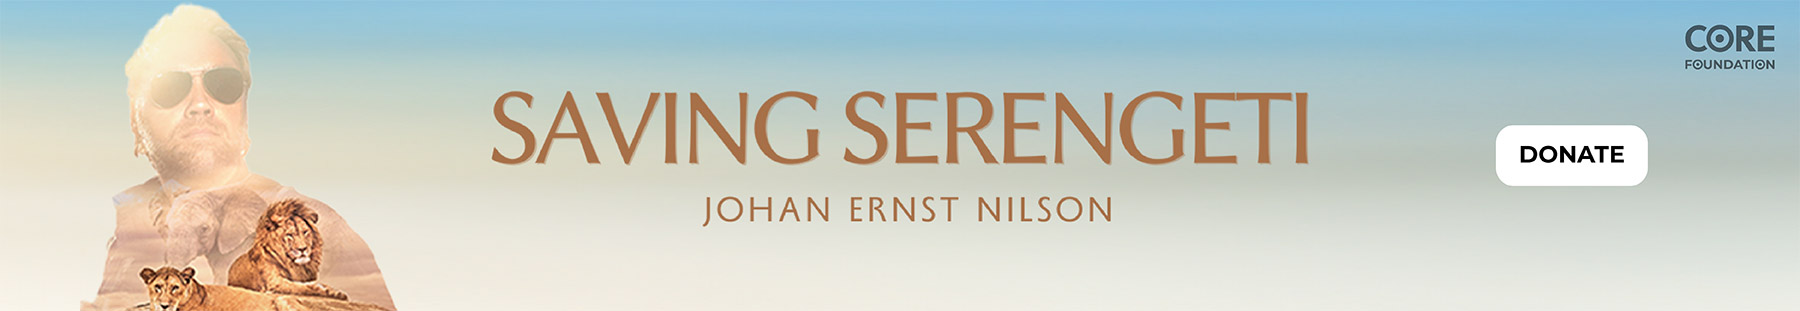 Banner for Donation to Saving Serengeti